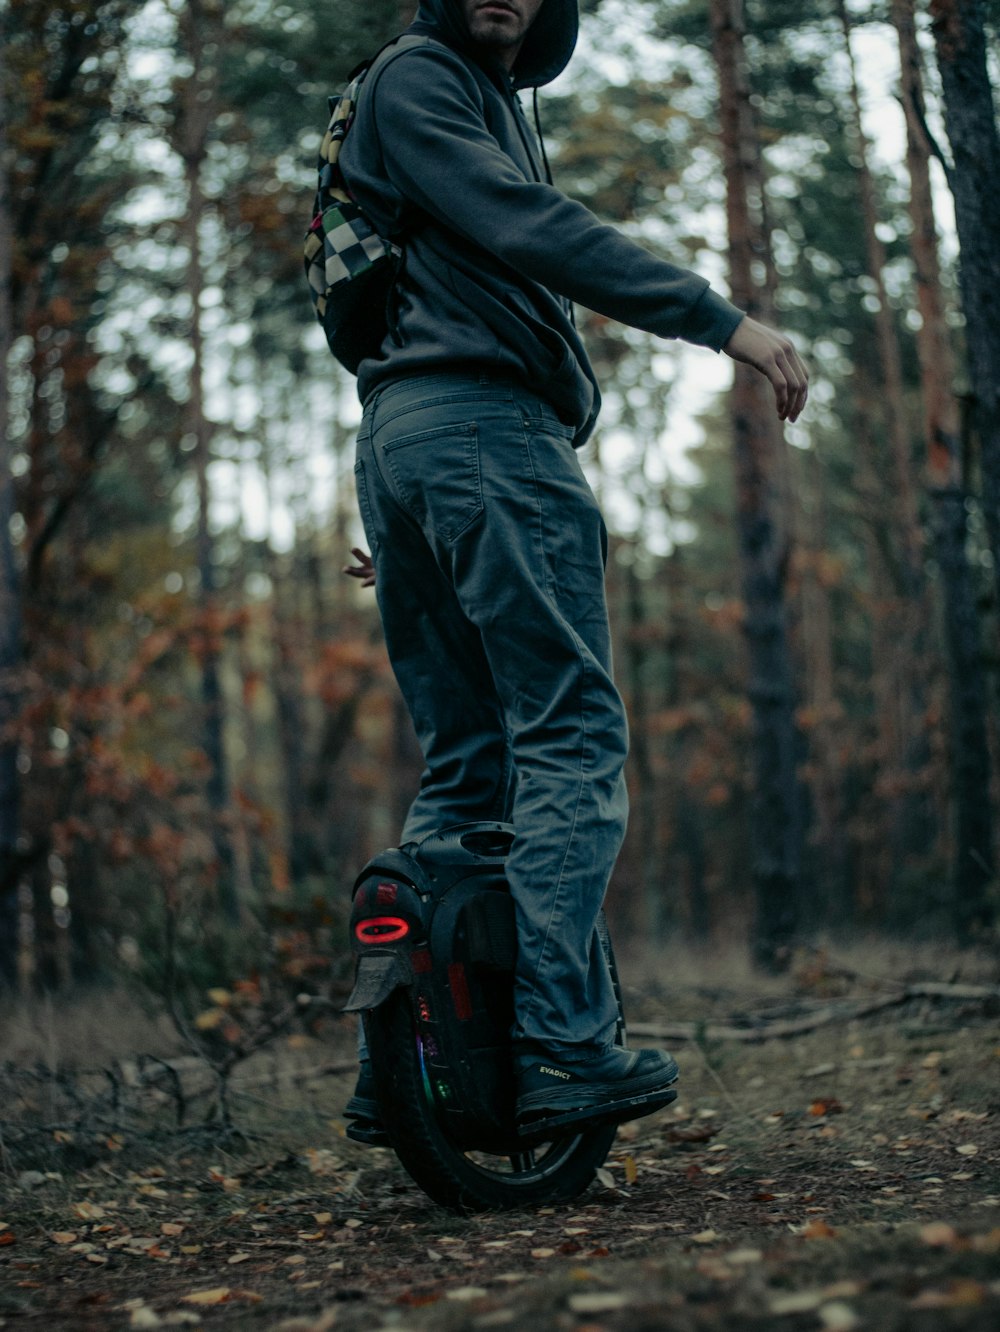 a man riding a skateboard through a forest